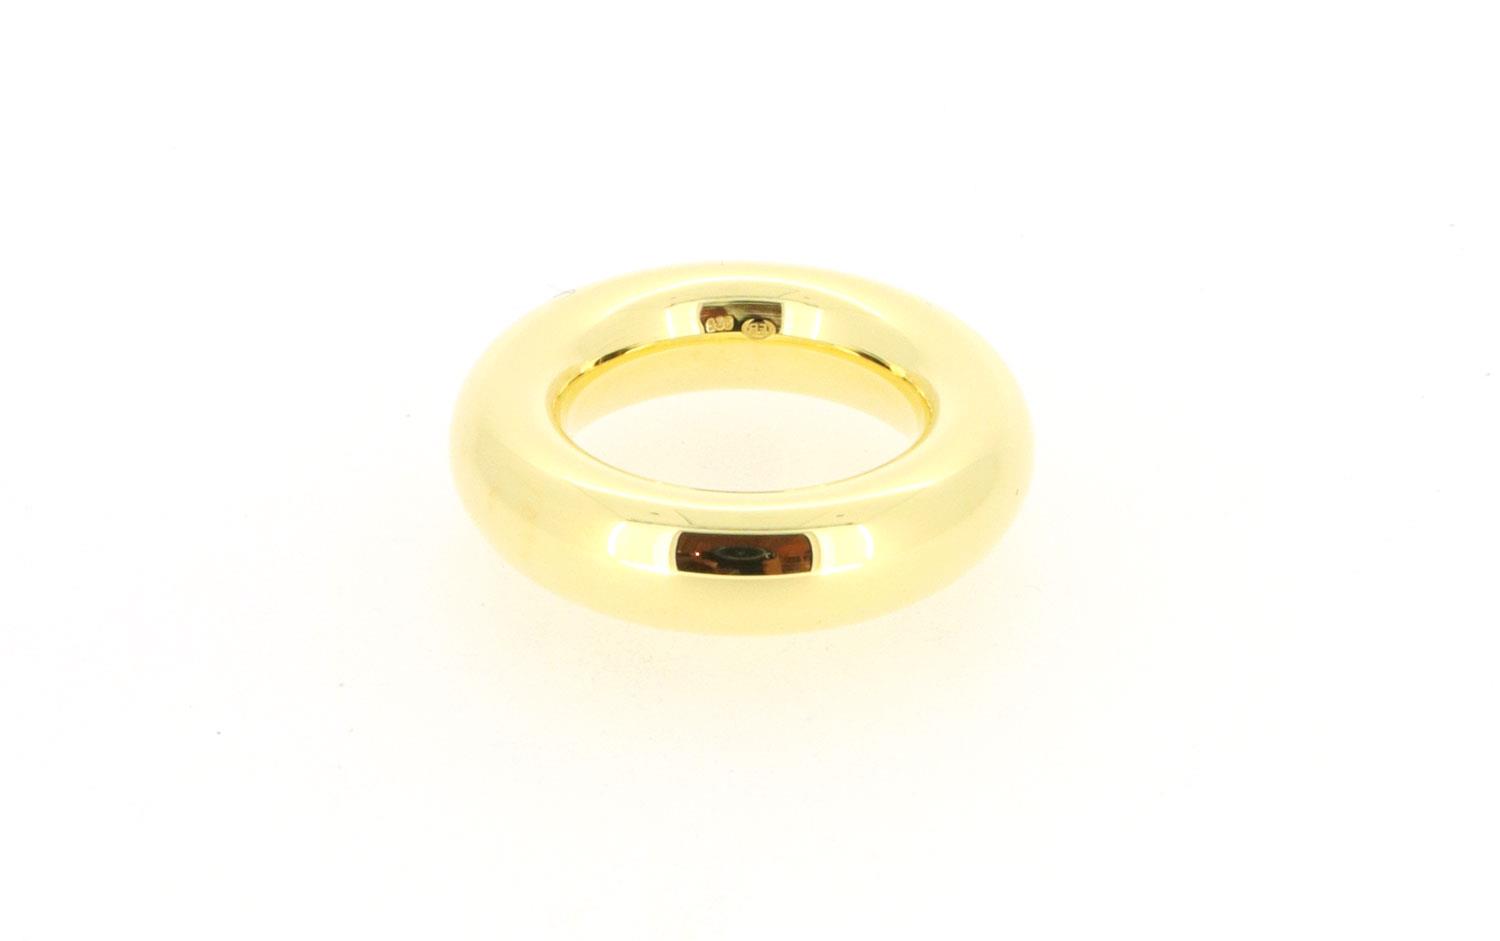 Ring massiv oval 925 Silber Gelbgold plattiert - Emil Brenk - 020502gpl.gg